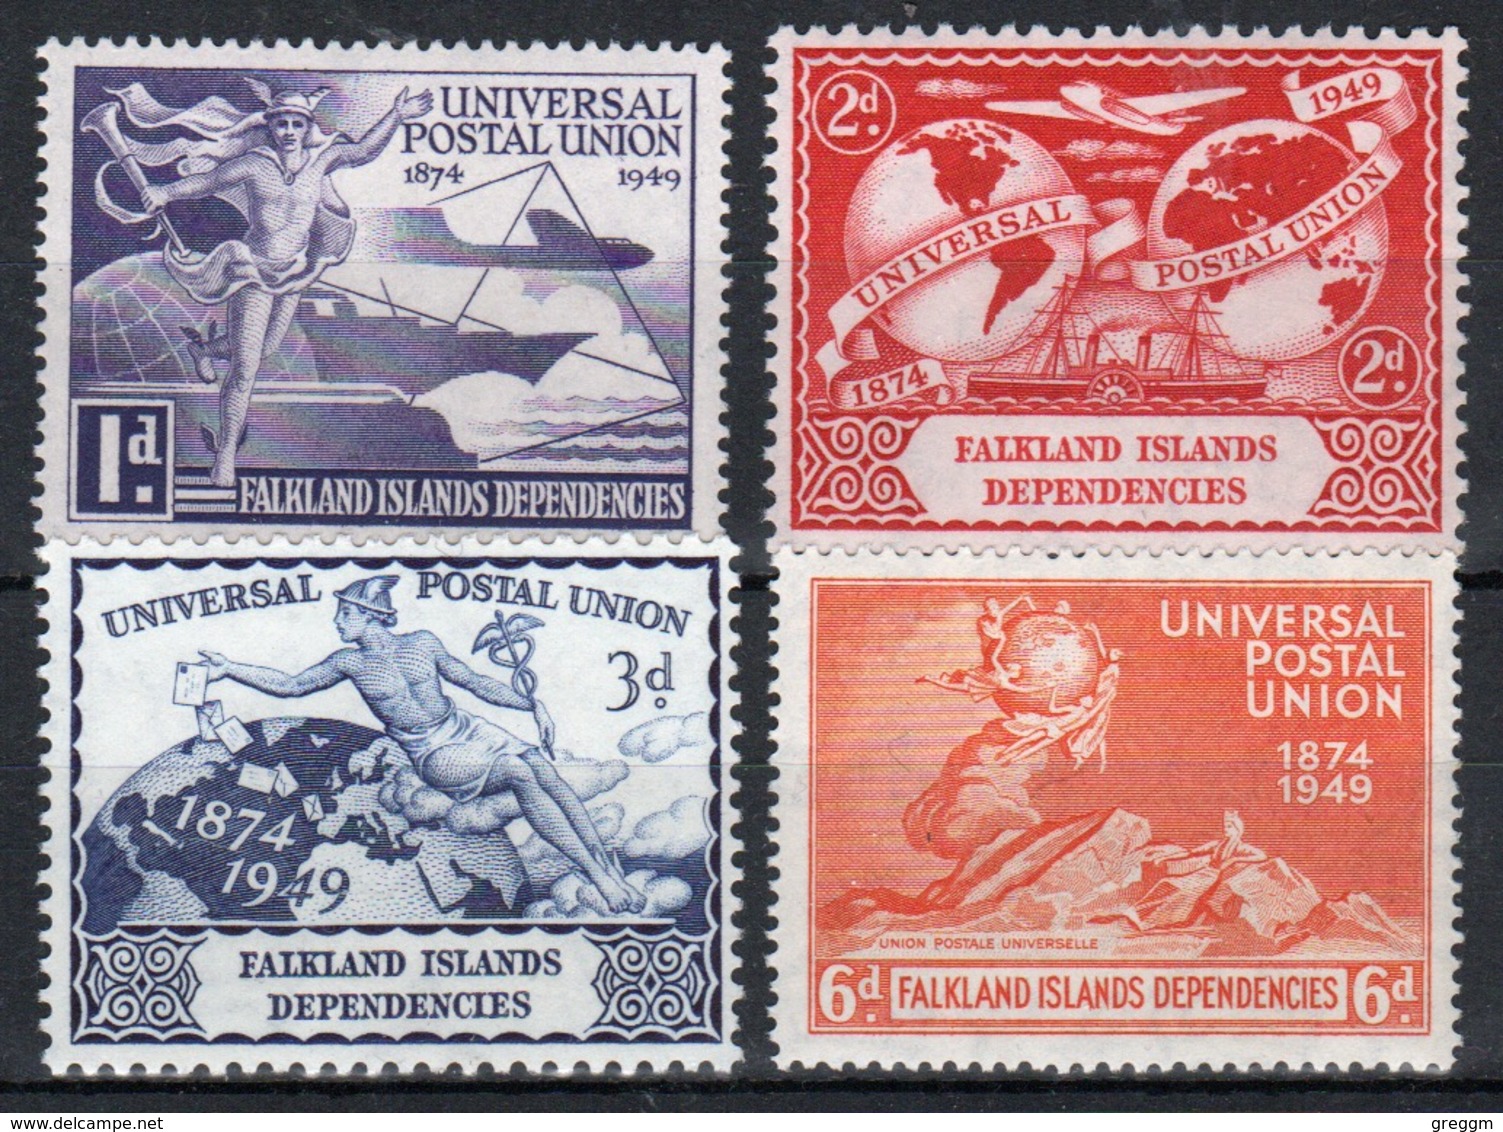 Falkland Islands Dependencies George VI Universal Postal Union Set From 1949 - Falkland Islands